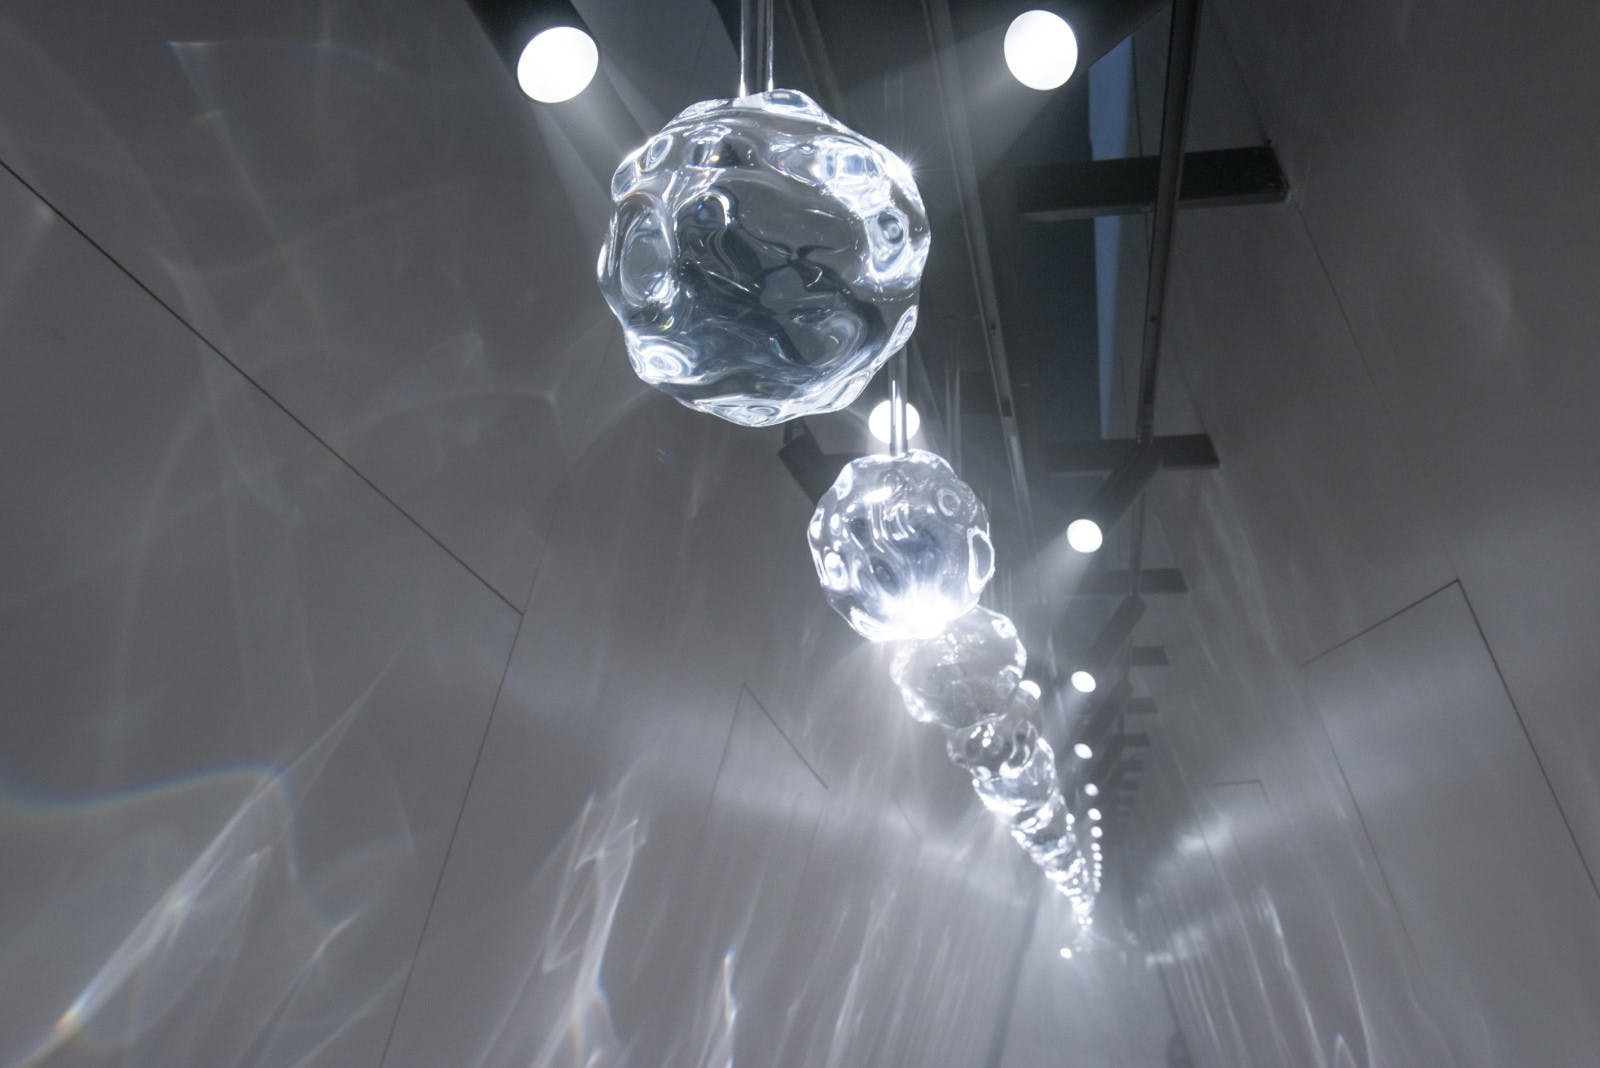 Image of Caustic Spheres Raytrace by Benjamin Hubert of LAYER for Dekton. Image Credit David Zanardi lr 1 in "Raytrace" with Dekton® in Milan 2019 - Cosentino